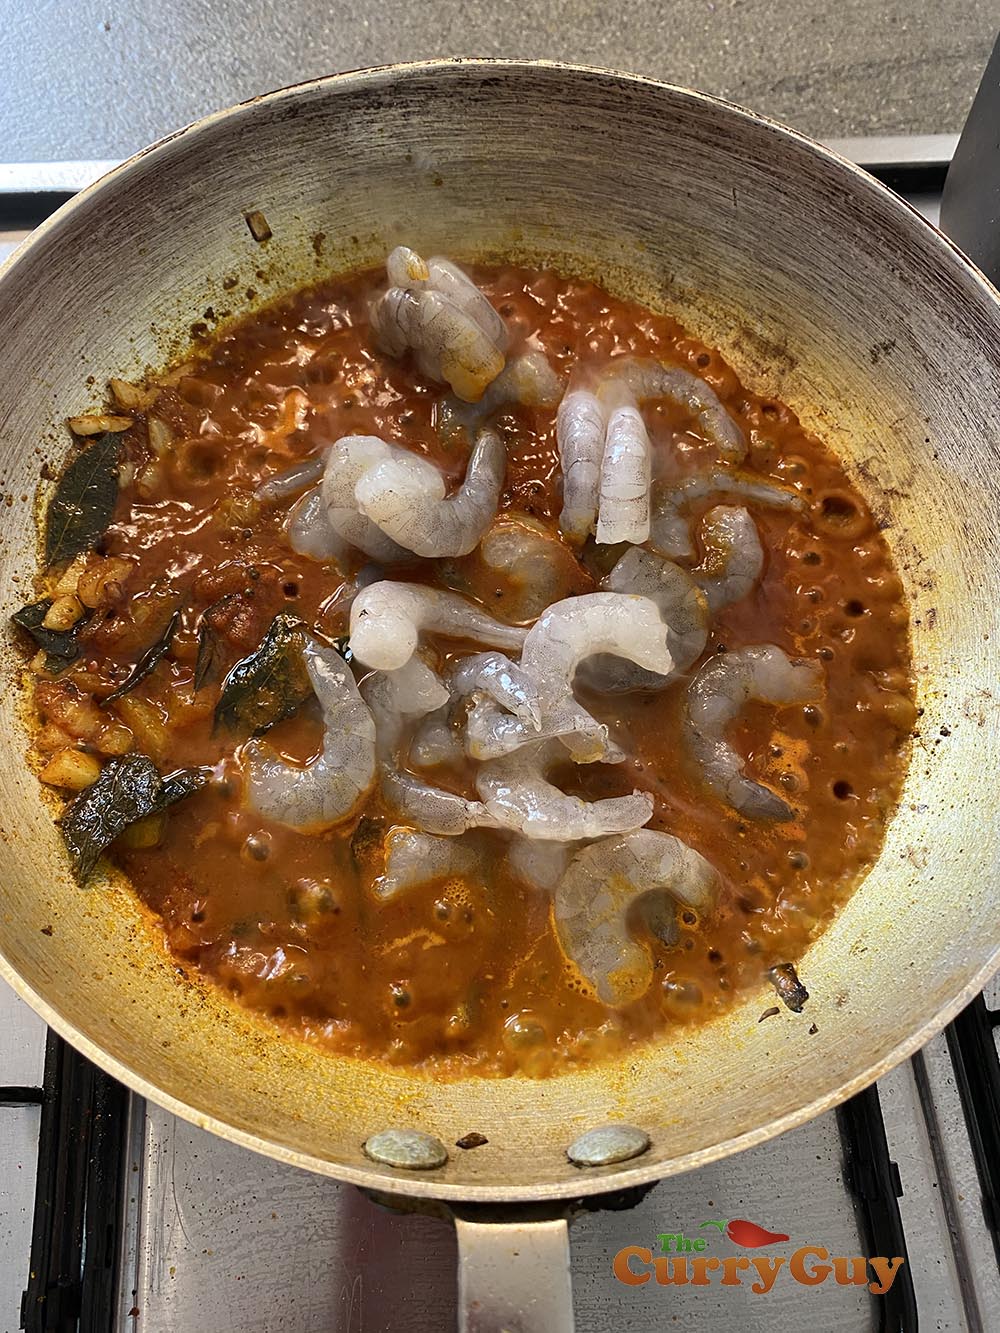 Adding raw prawns to the curry